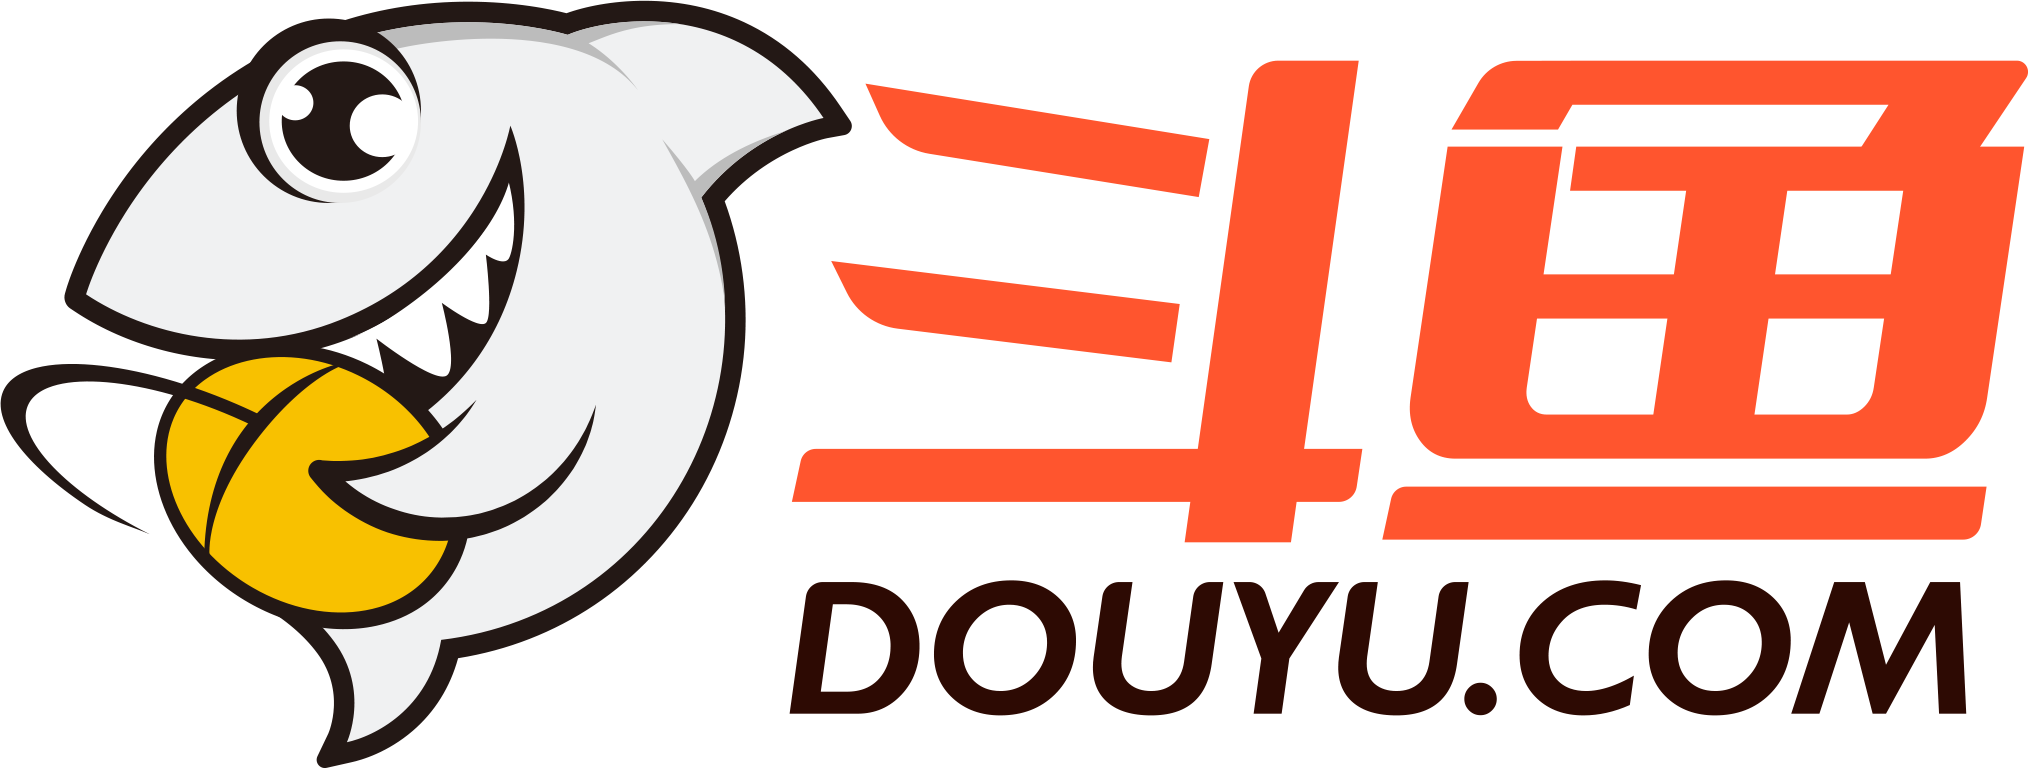 DouYu logo large (transparent PNG)